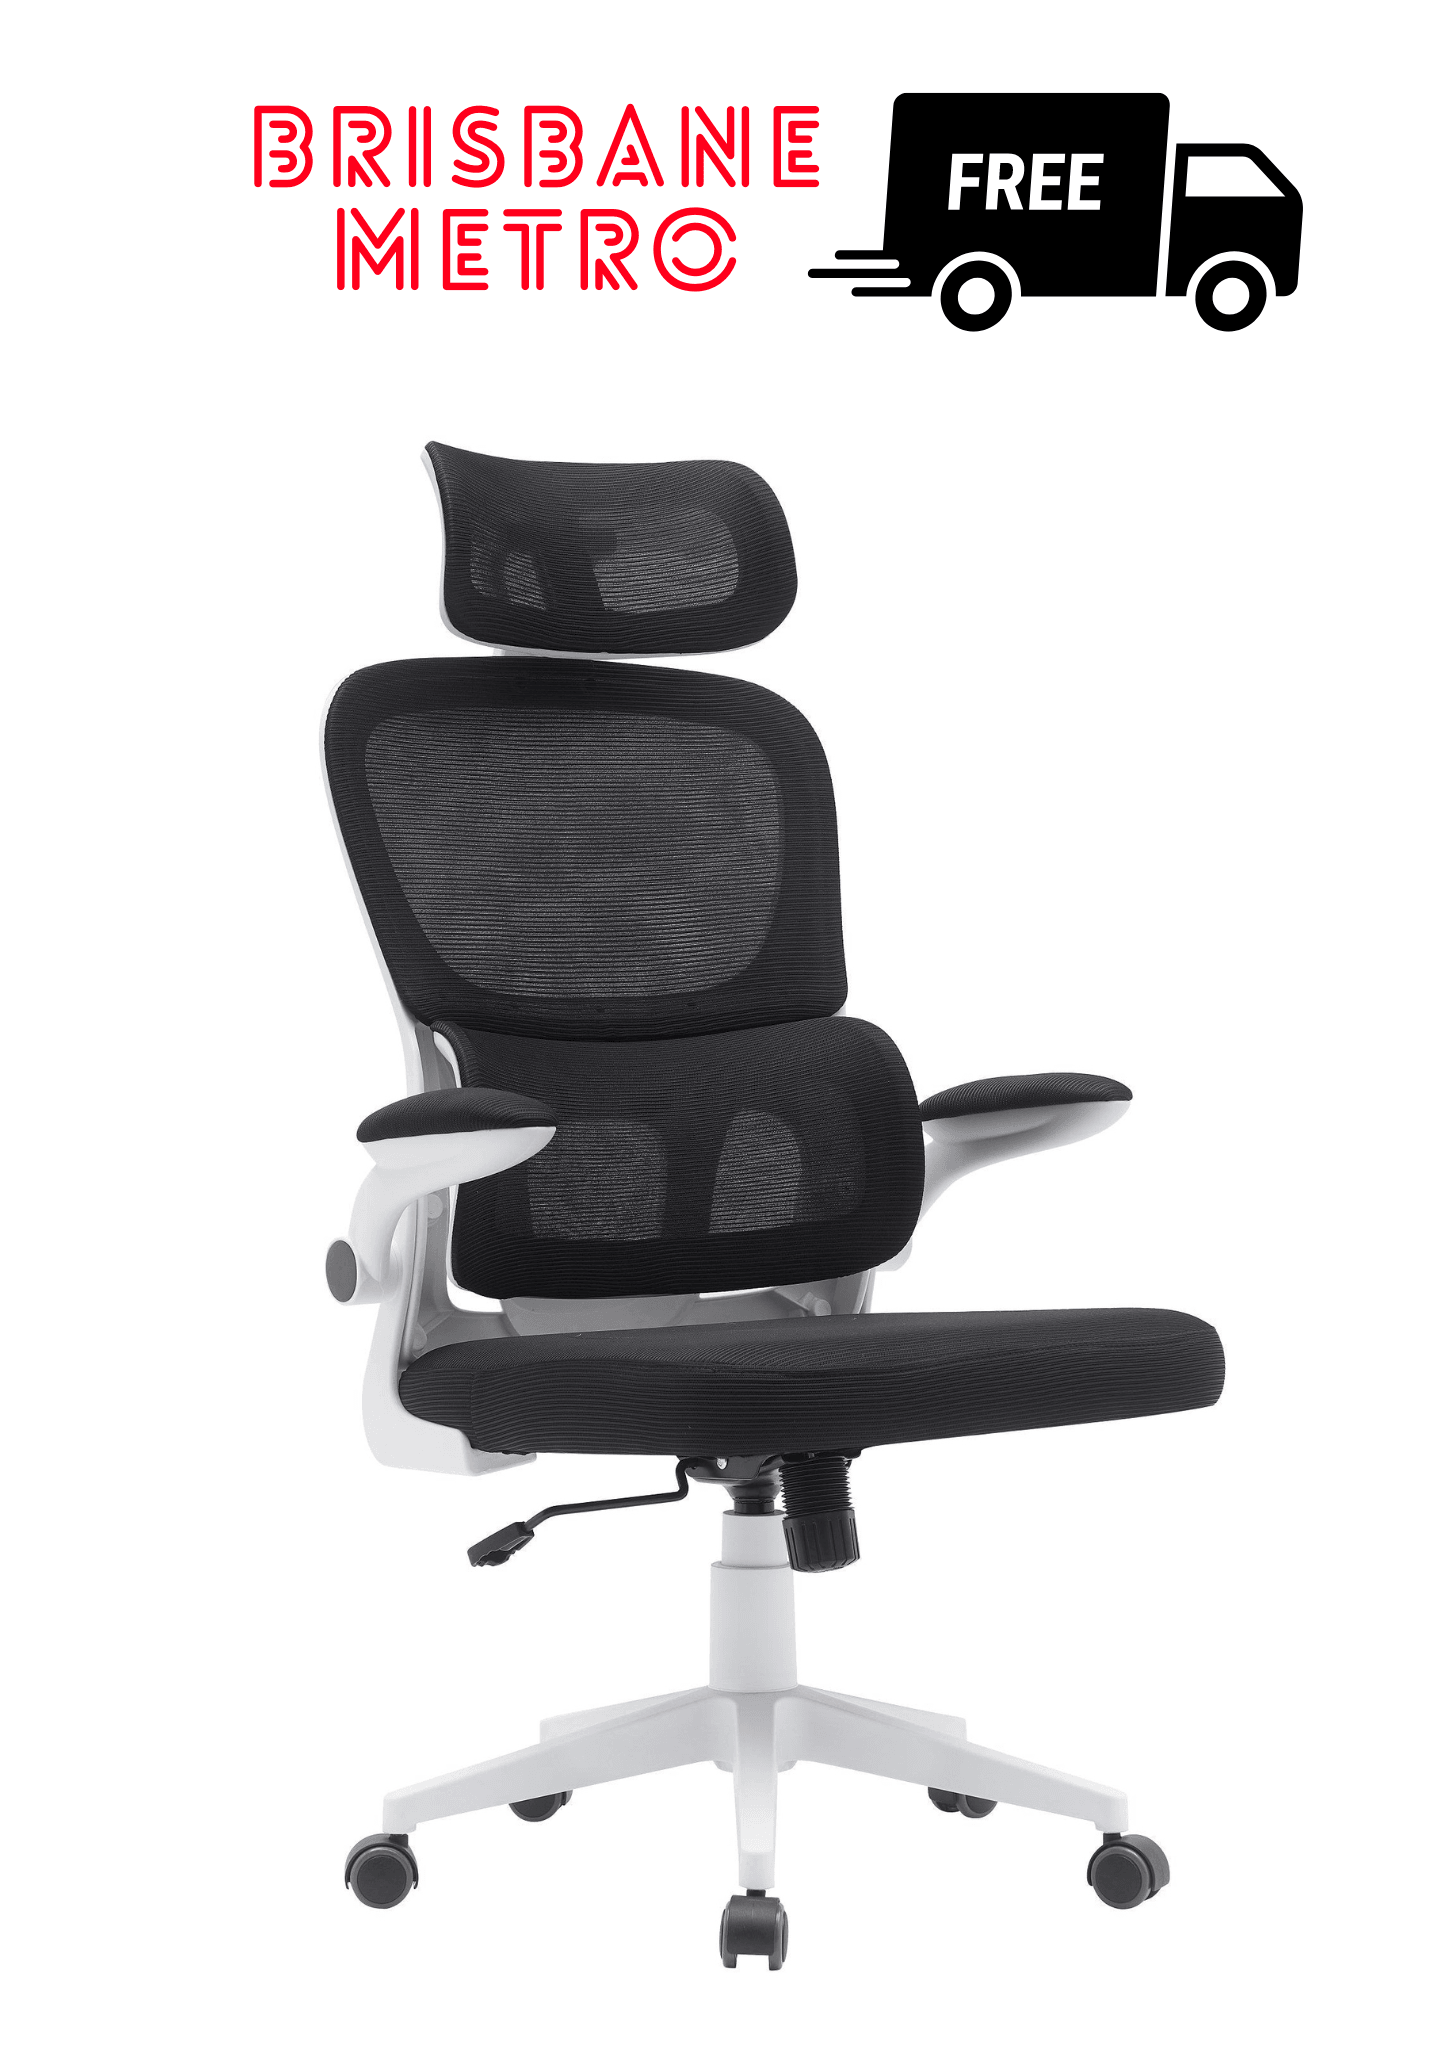 Black mesh ergonomic office chair with sleek design